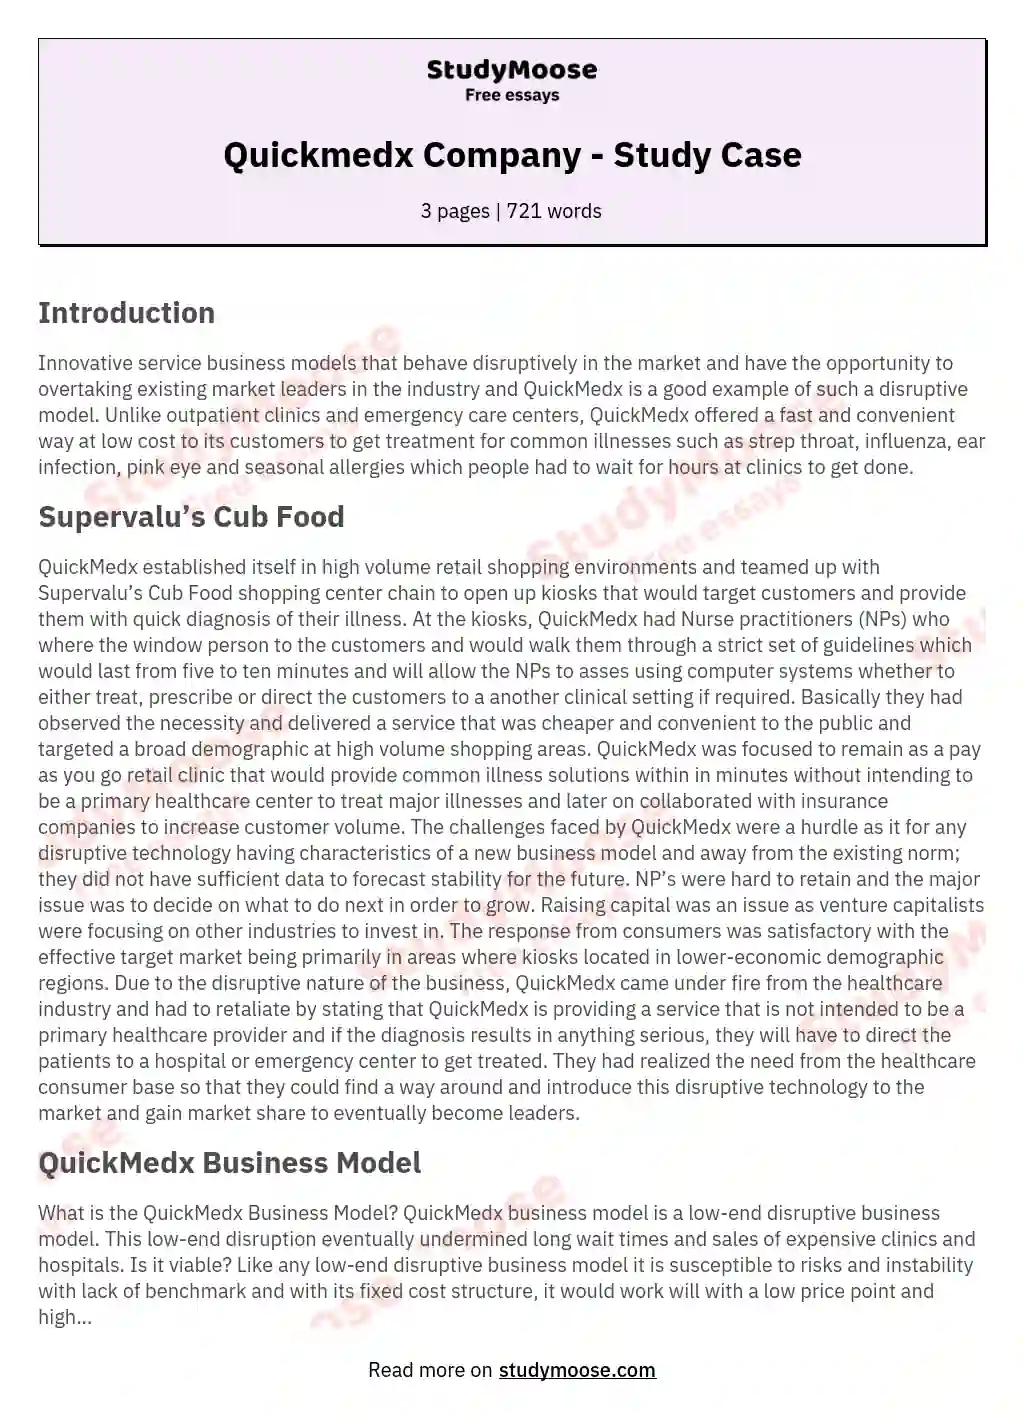 Quickmedx Company - Study Case essay